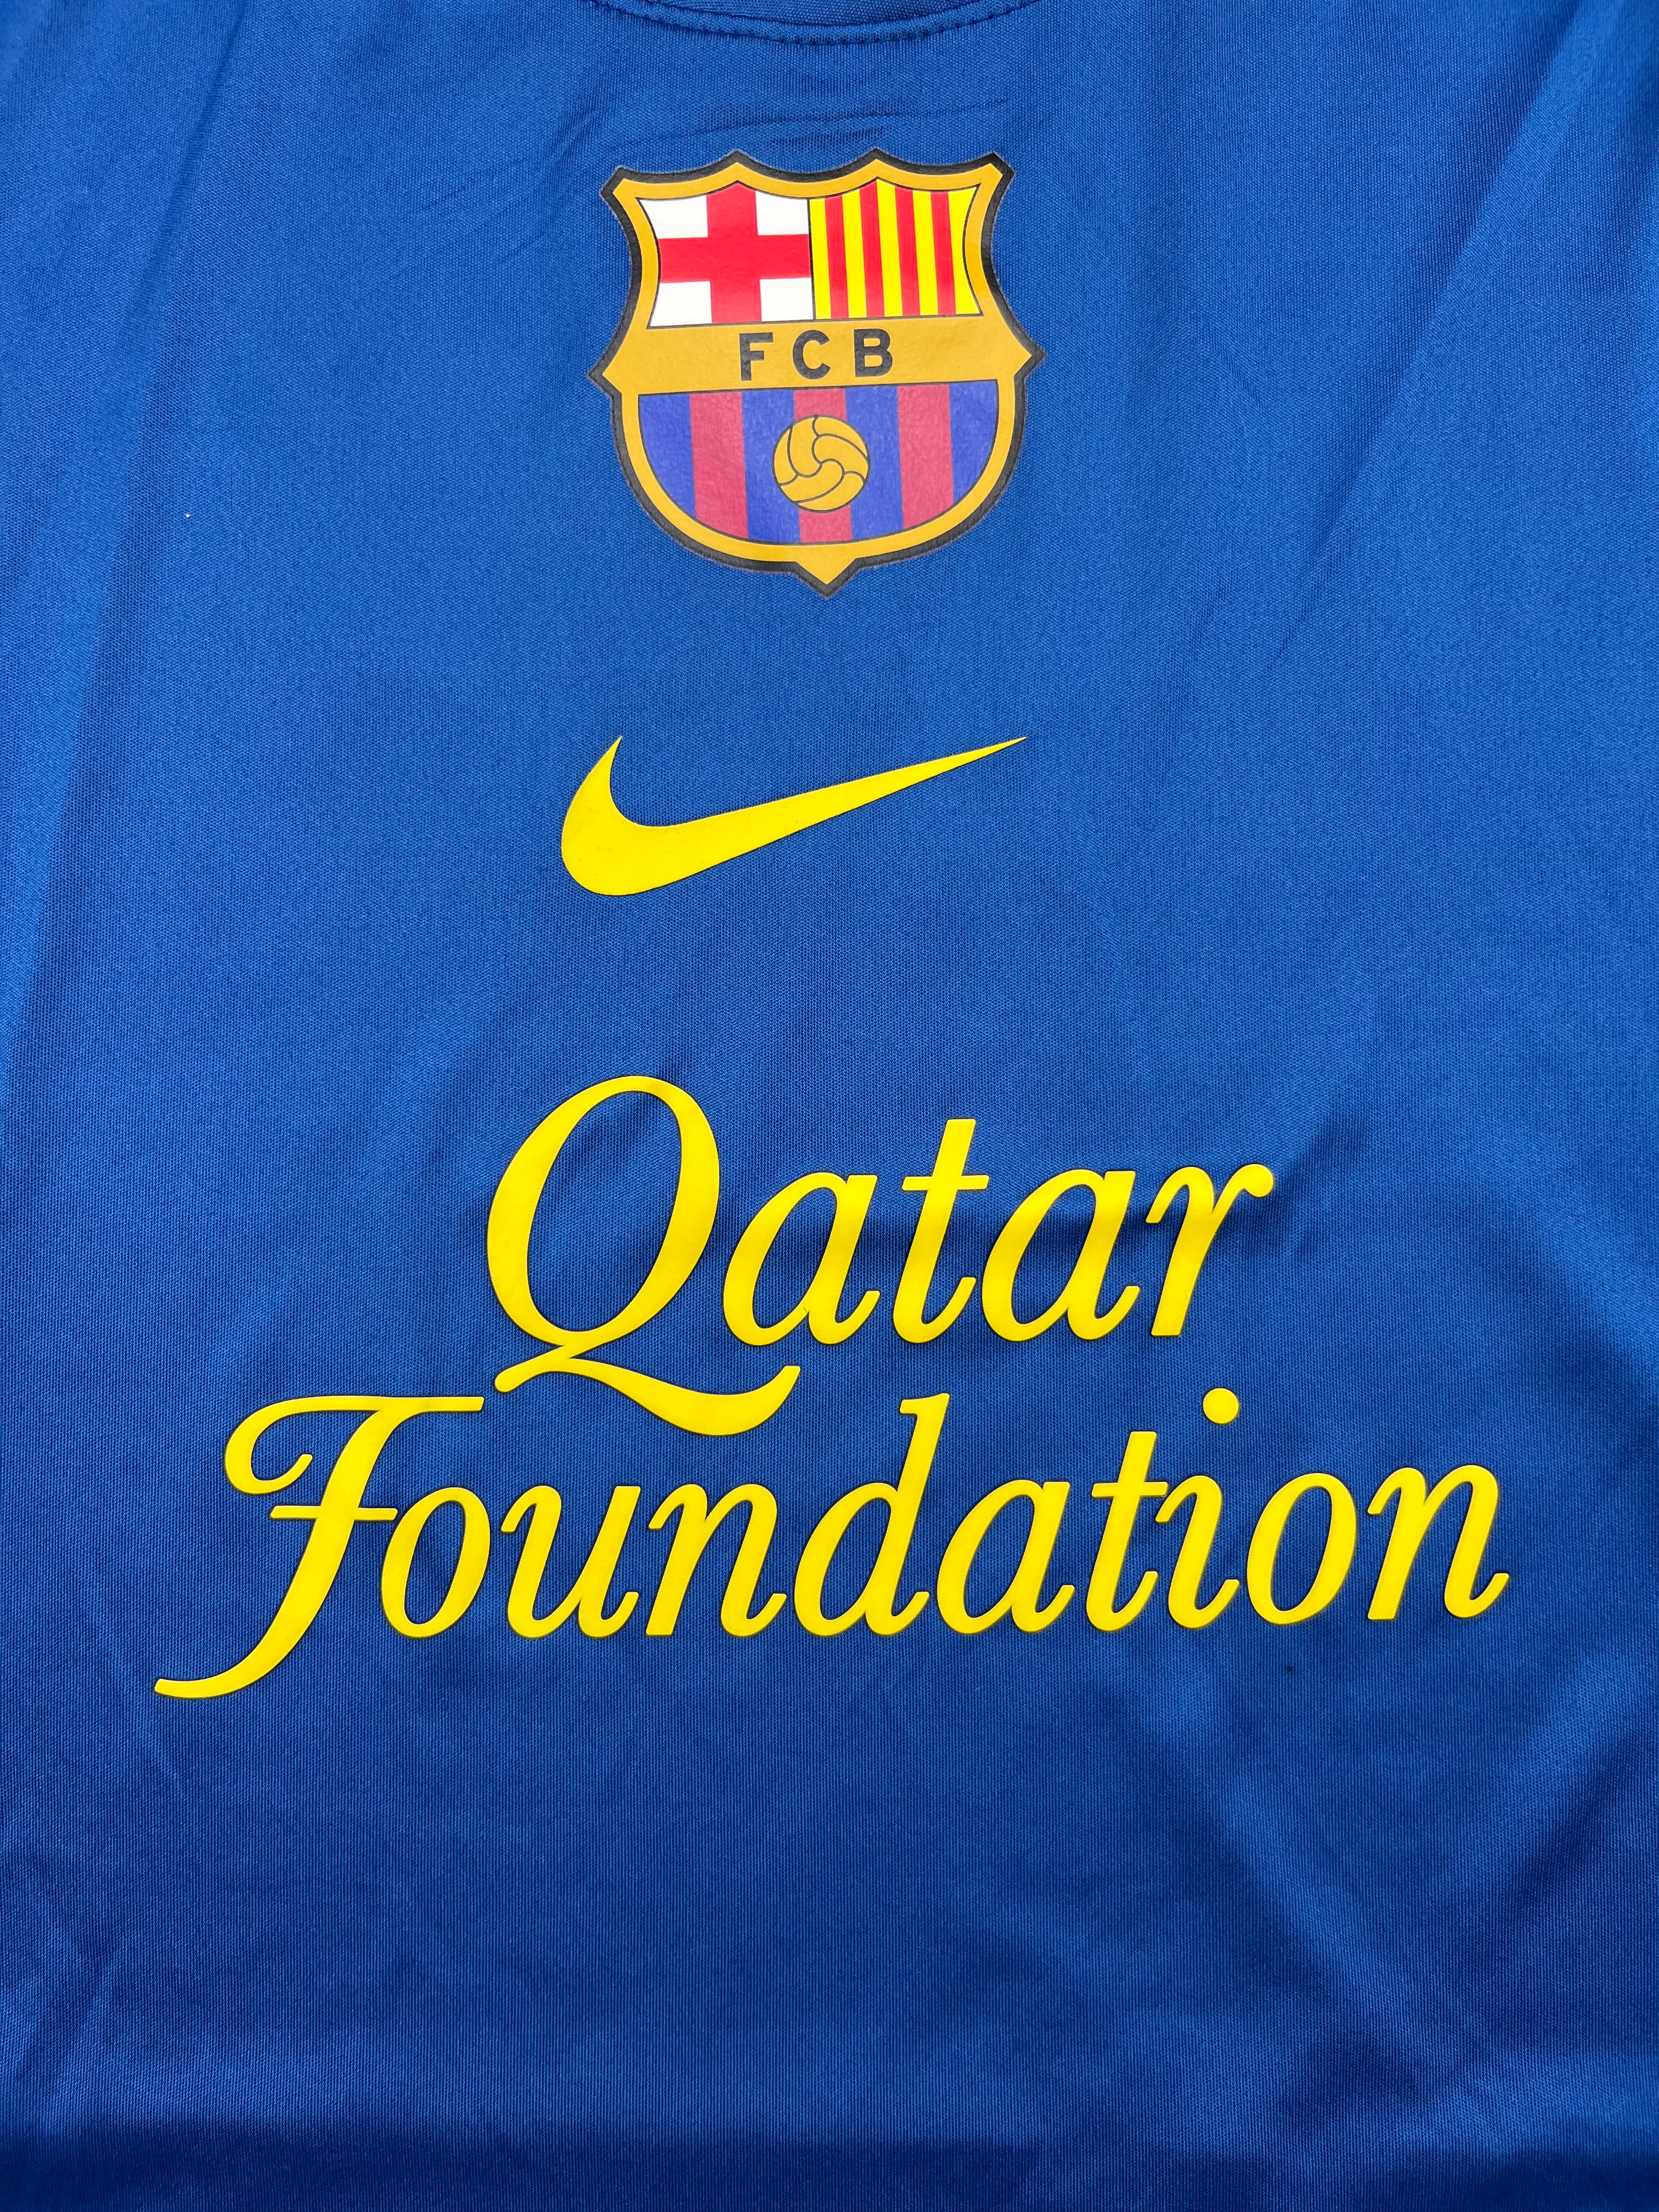 2012/13 Barcelona Training Shirt (XL) 9/10